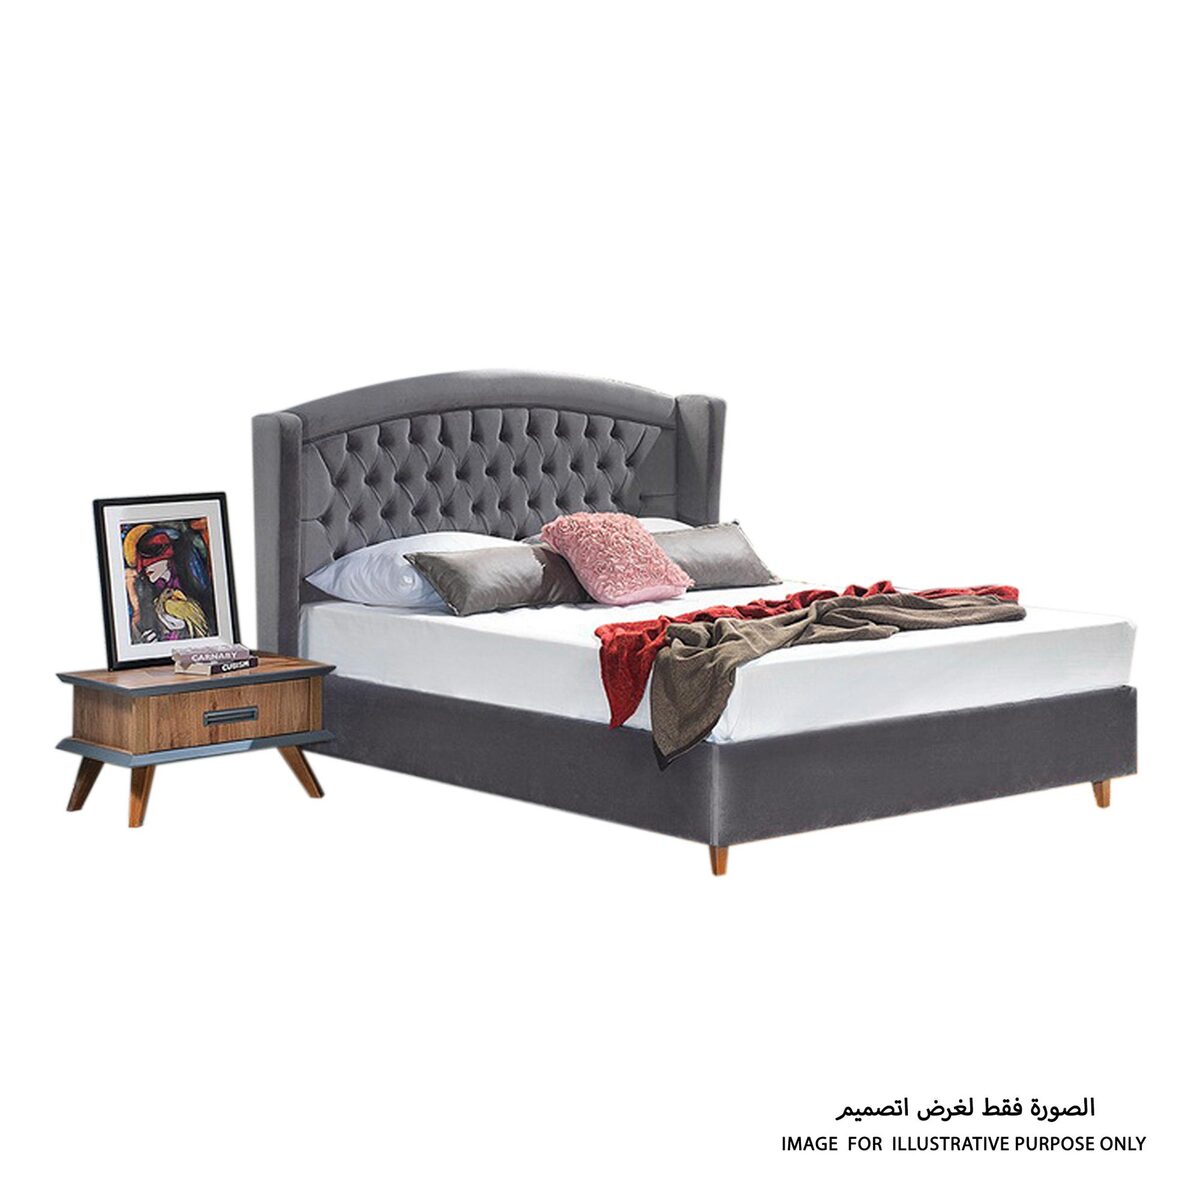 OSLO Bed Cot 180x200cm ,Size:110x180x200 Cms,( HxWxL)